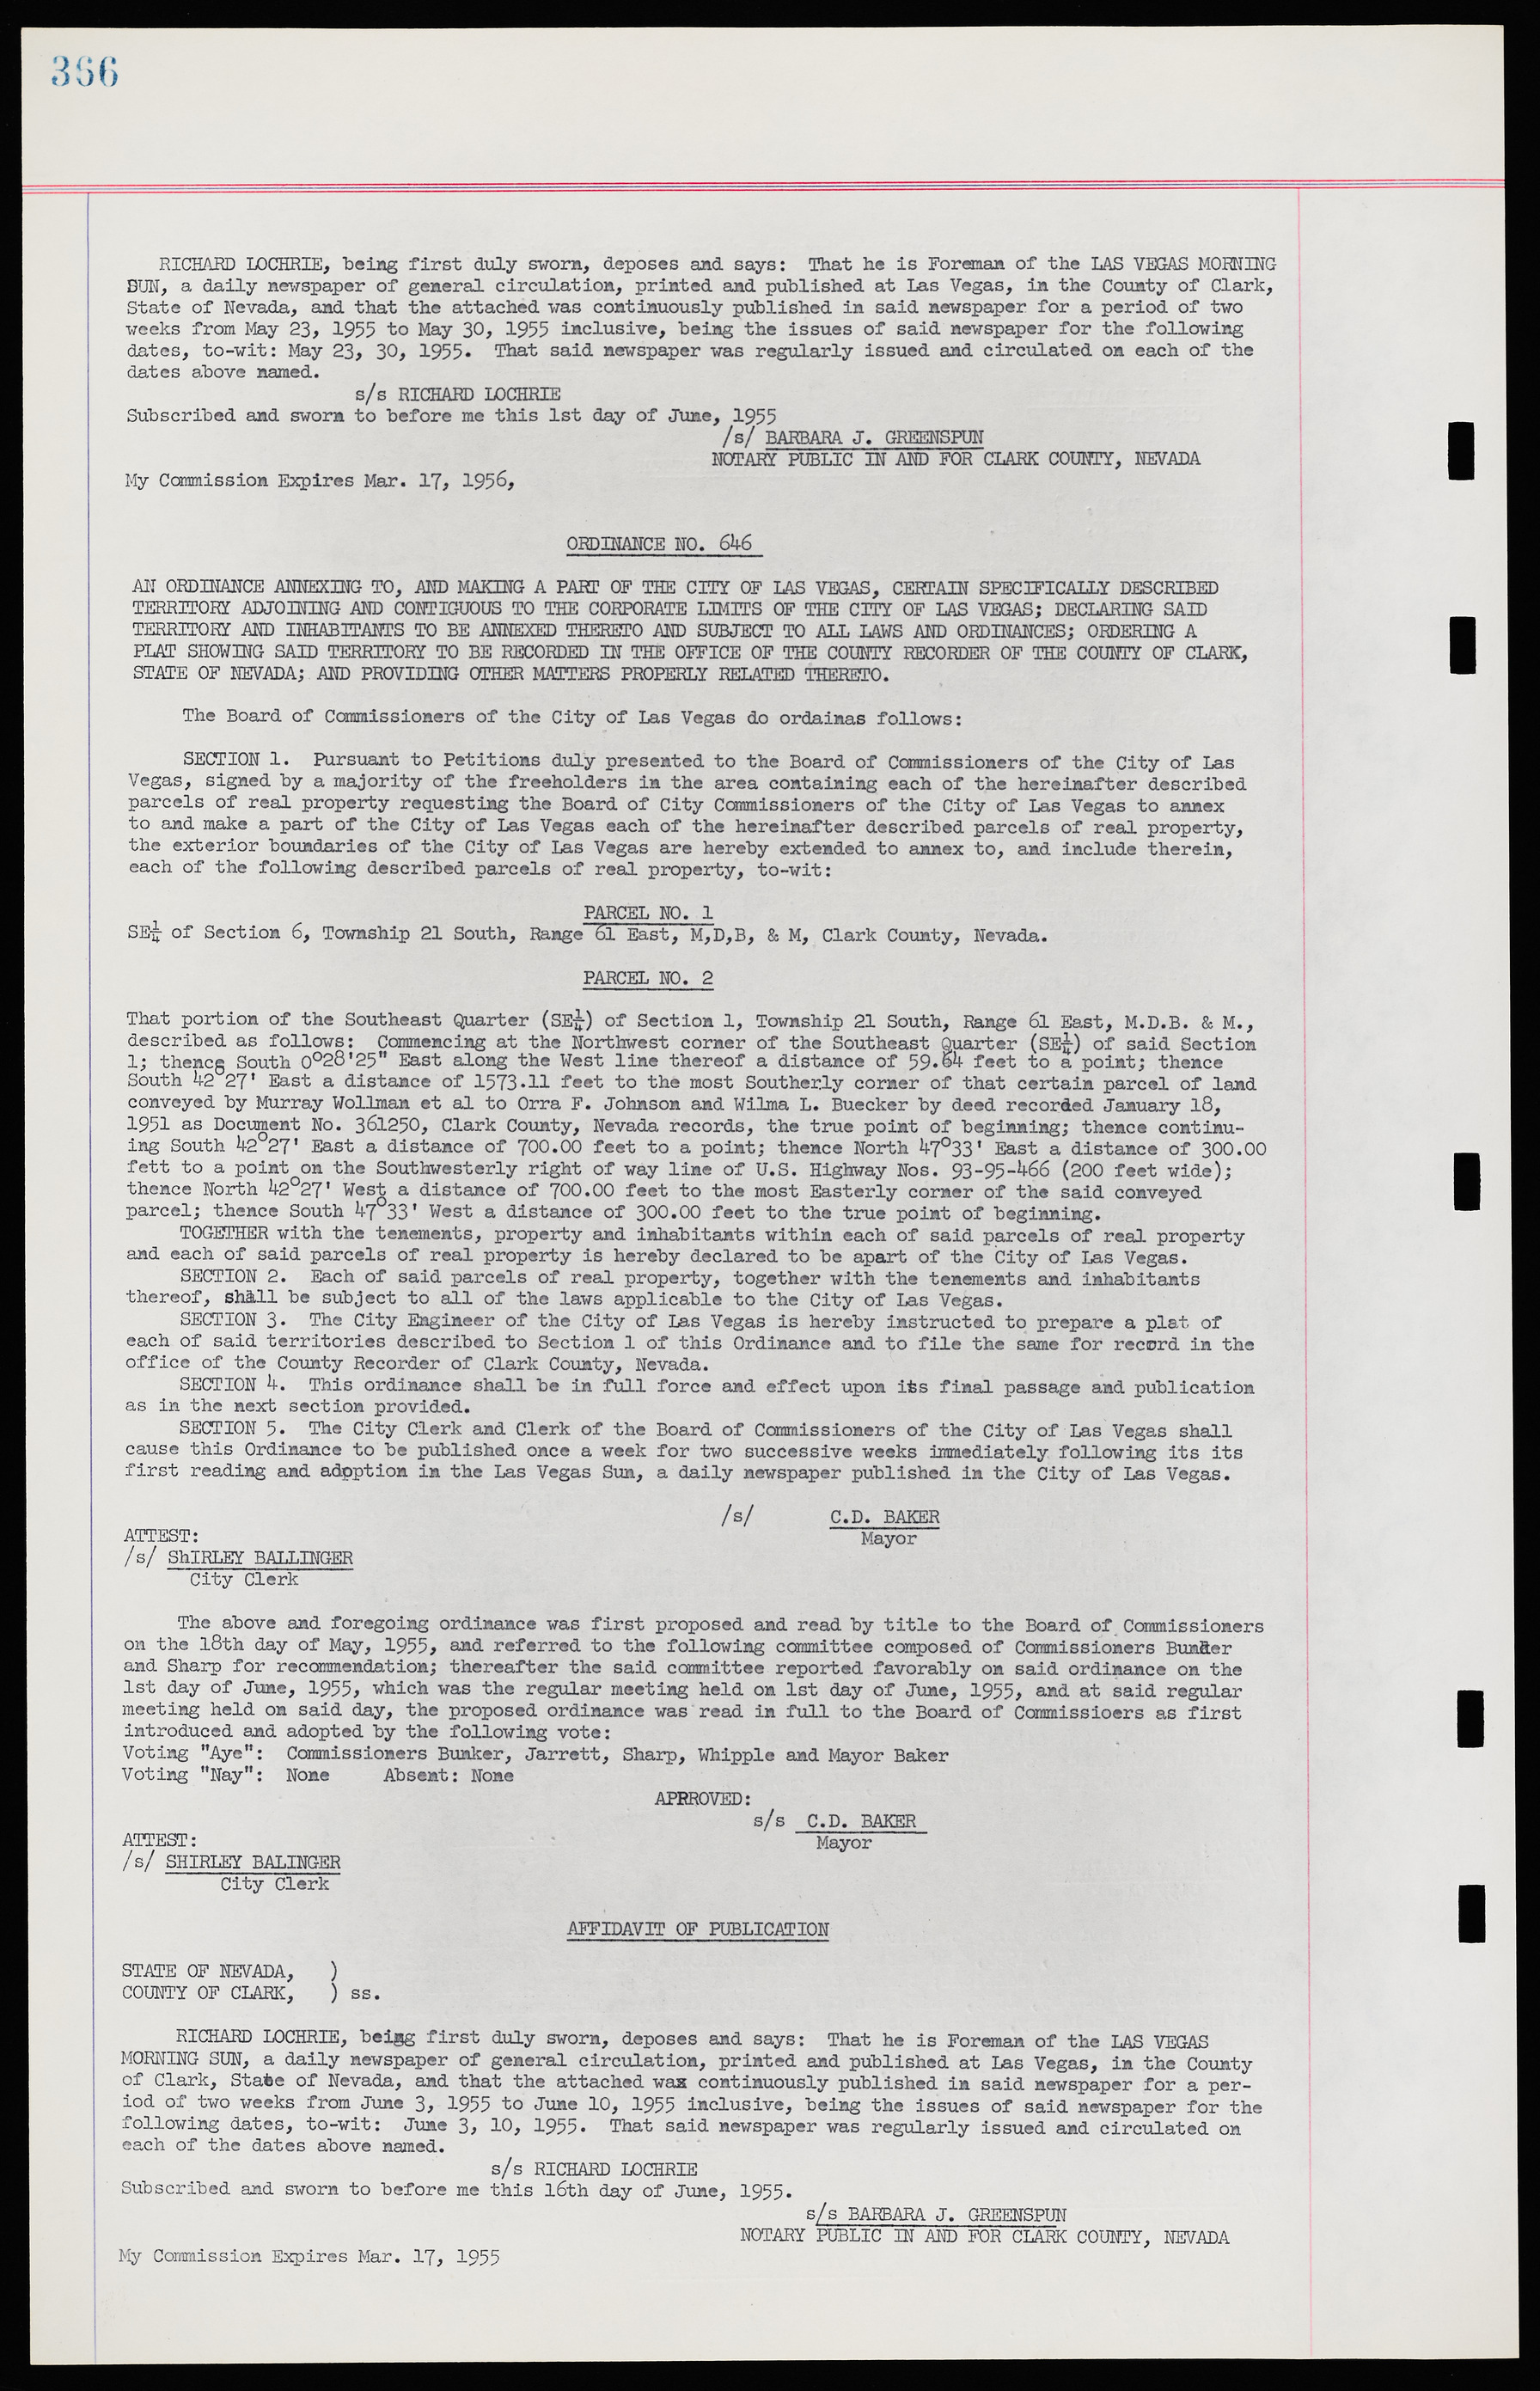 Las Vegas City Ordinances, November 13, 1950 to August 6, 1958, lvc000015-374